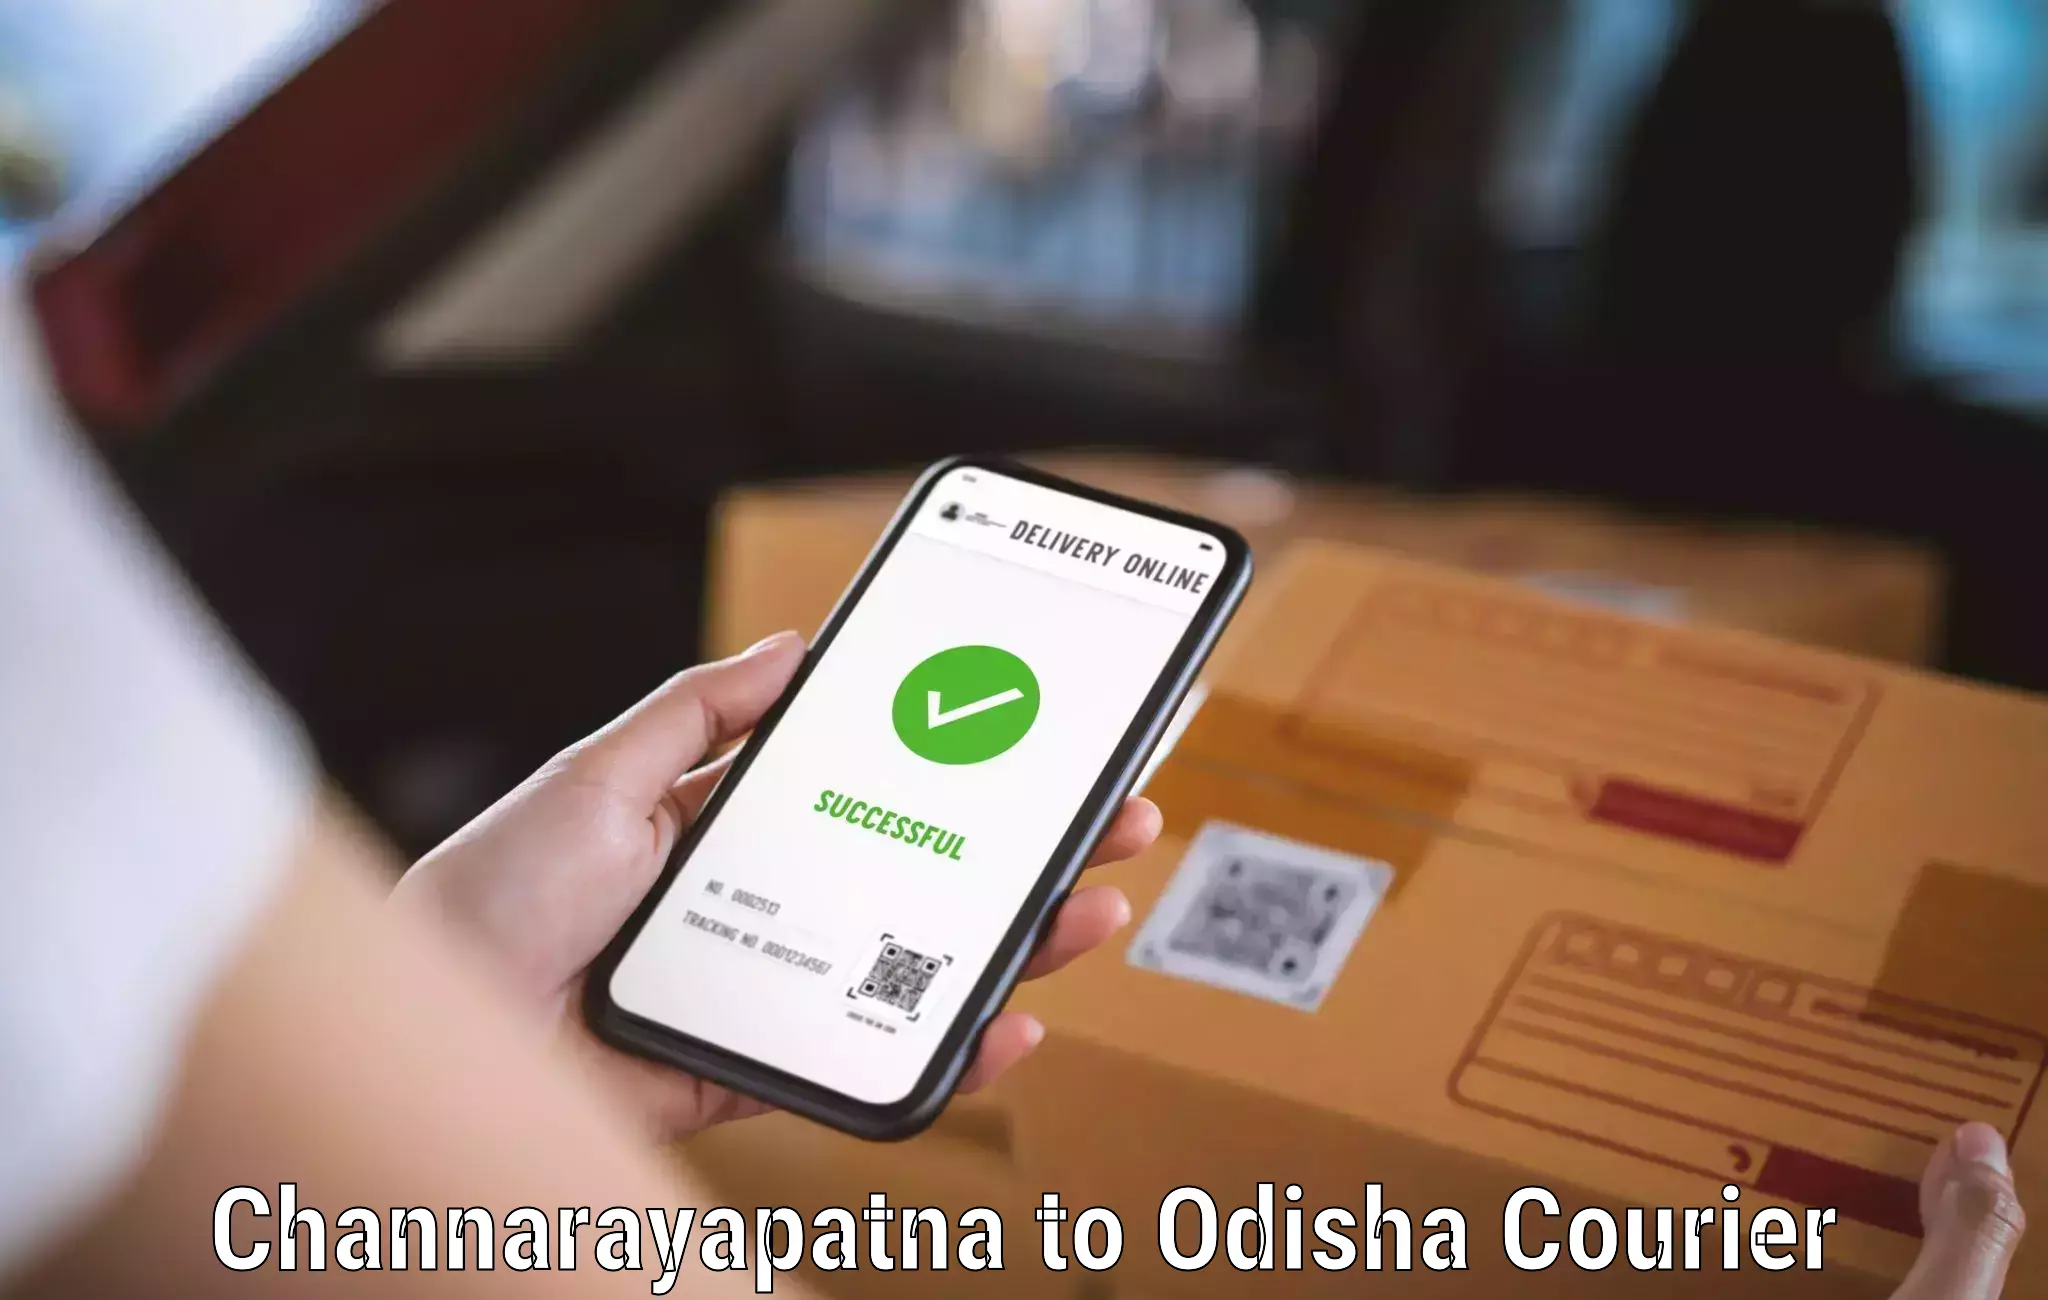 Courier service comparison in Channarayapatna to Parlakhemundi